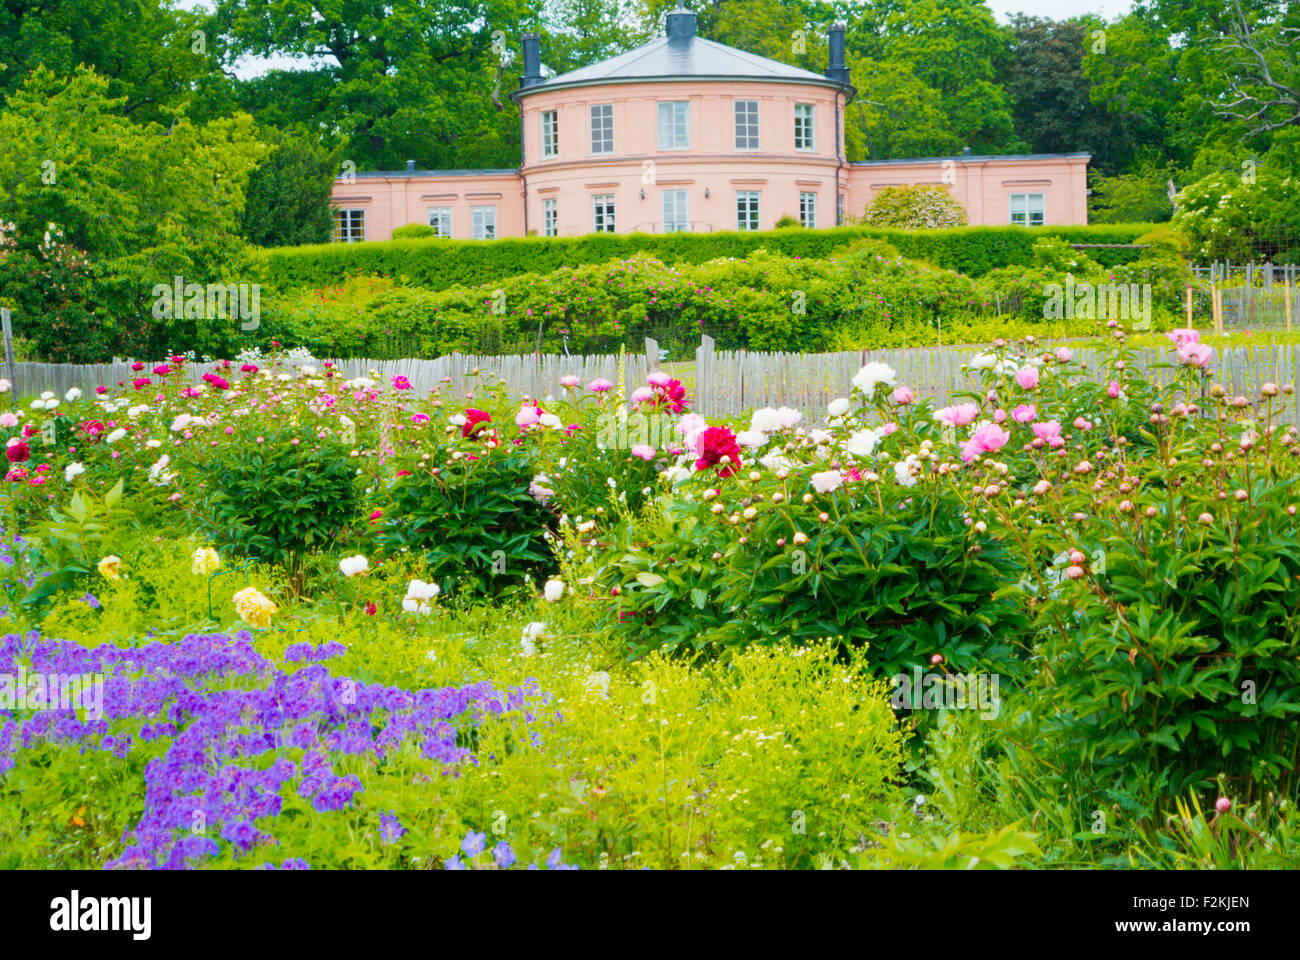 Rosendals Trädgård, Rosendal gardens, with the garden house, Djurgården island, Stockholm, Sweden Stock Photo